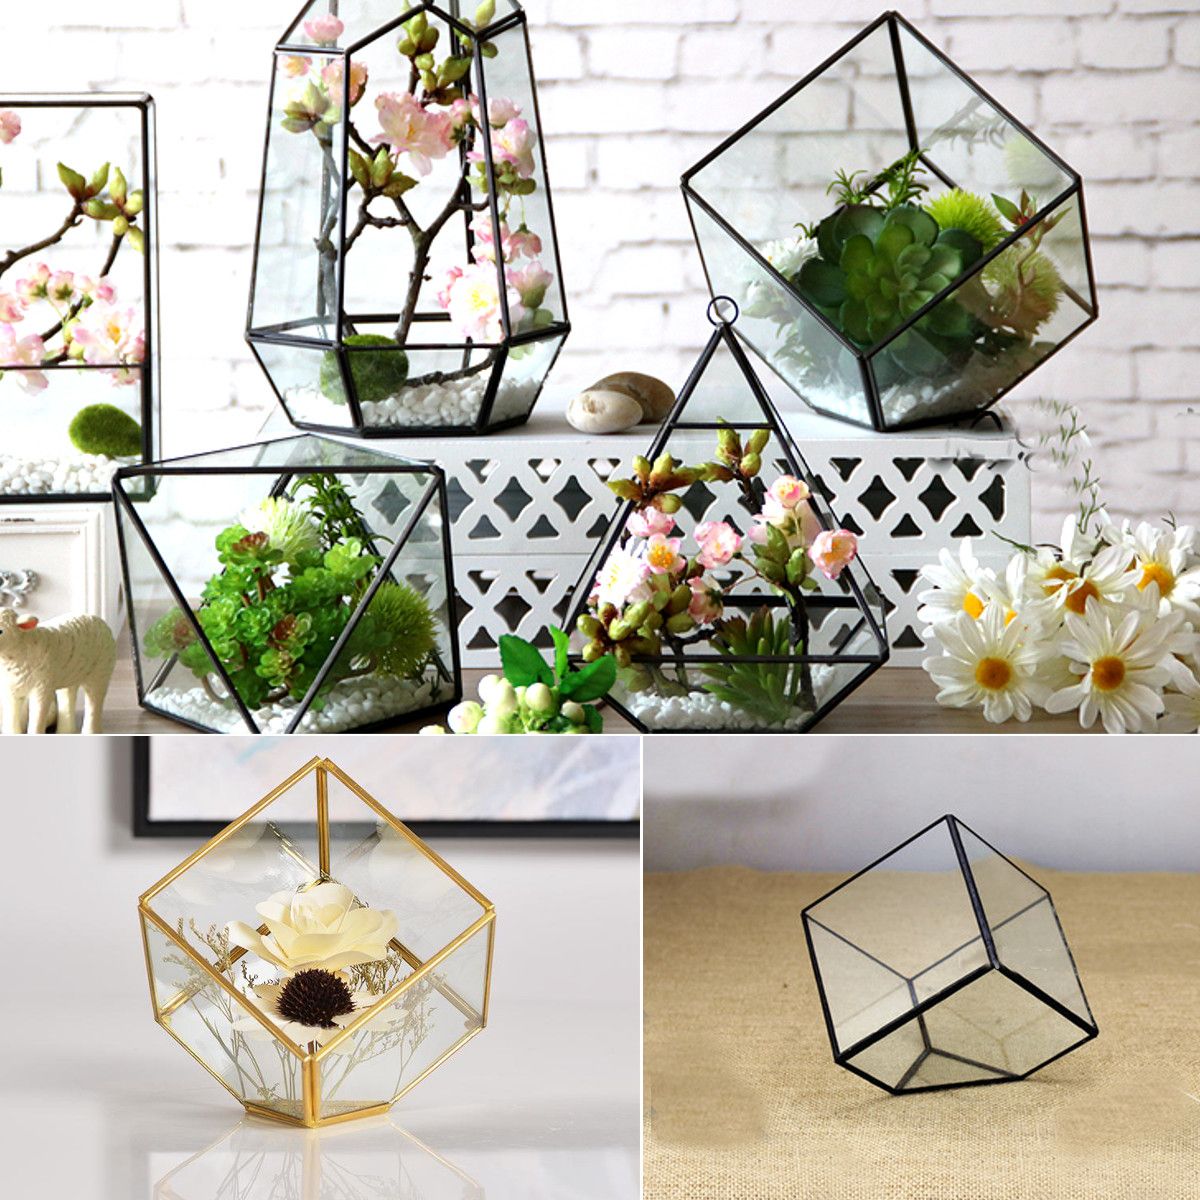 Modern-Glass-Geometric-Terrarium-Tabletop-Succulent-Plants-Inclined-Container-Fern-Moss-Flower-Pot-1360568